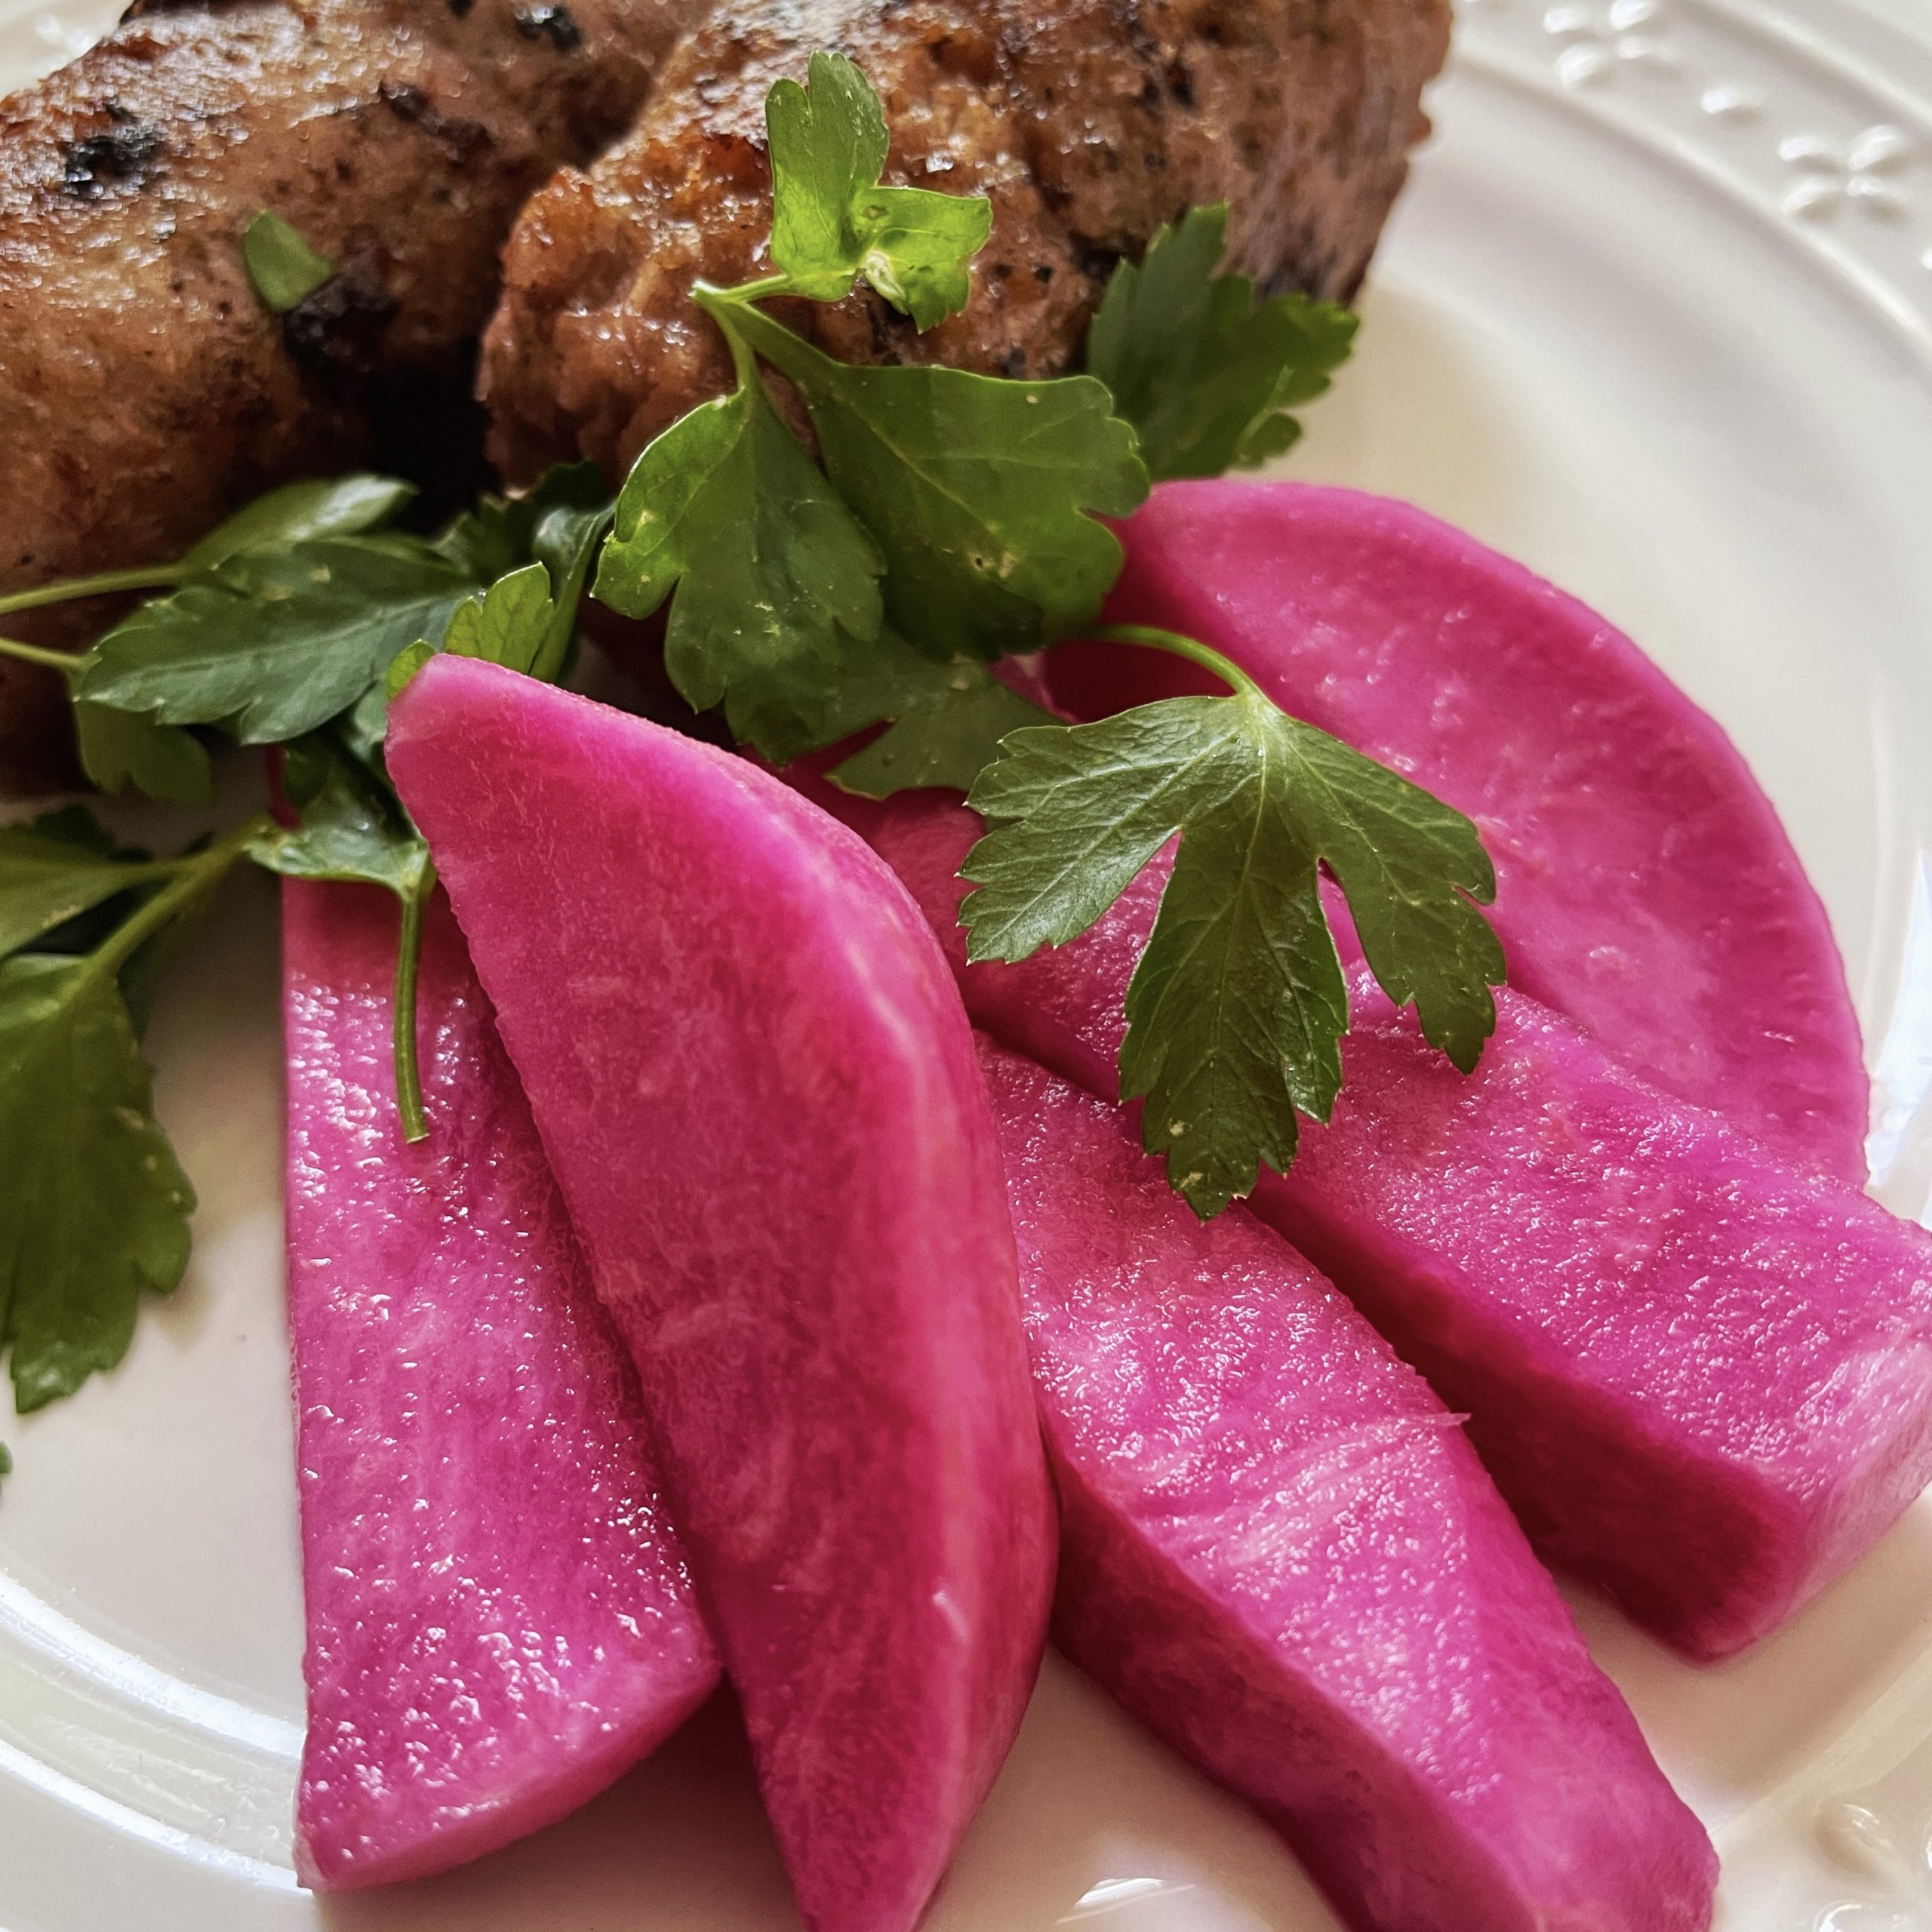 Fermented pink turnips